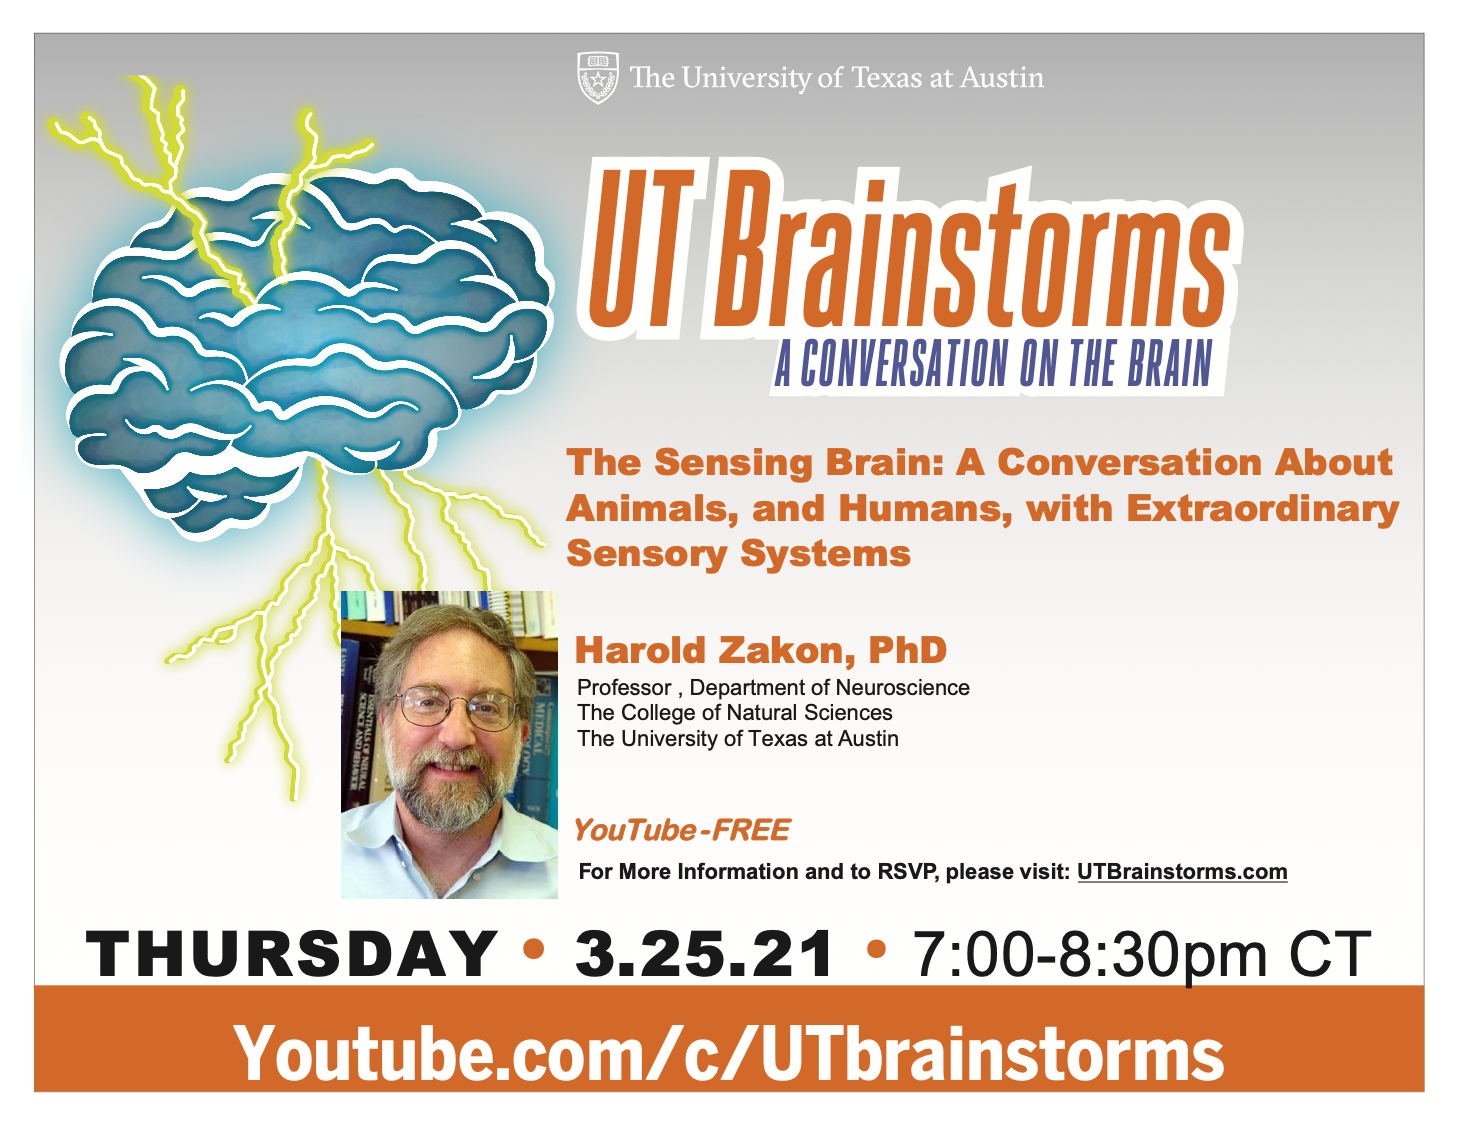 UT Brainstorms: A Conversation on the Brain (Virtual), Austin, Texas, United States